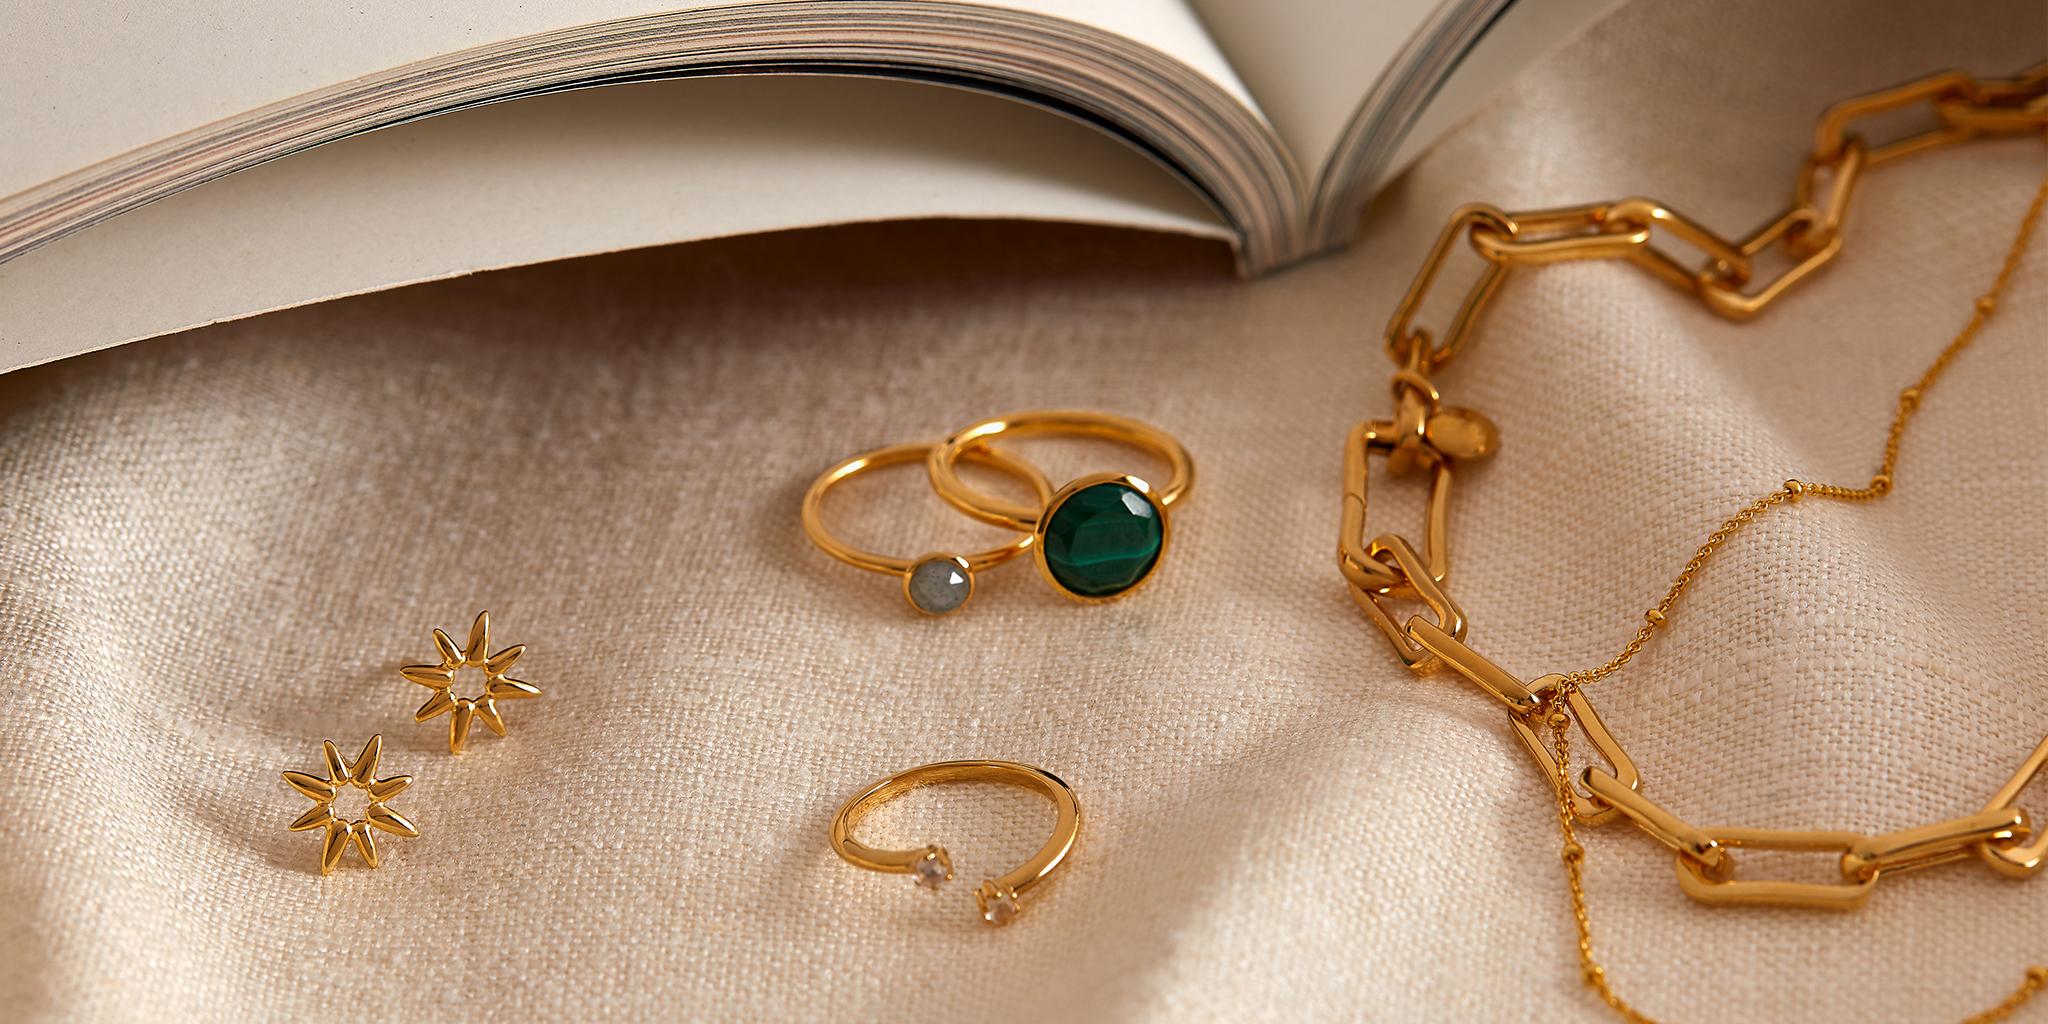 Joseph Nelson Jewelry Engagement Rings